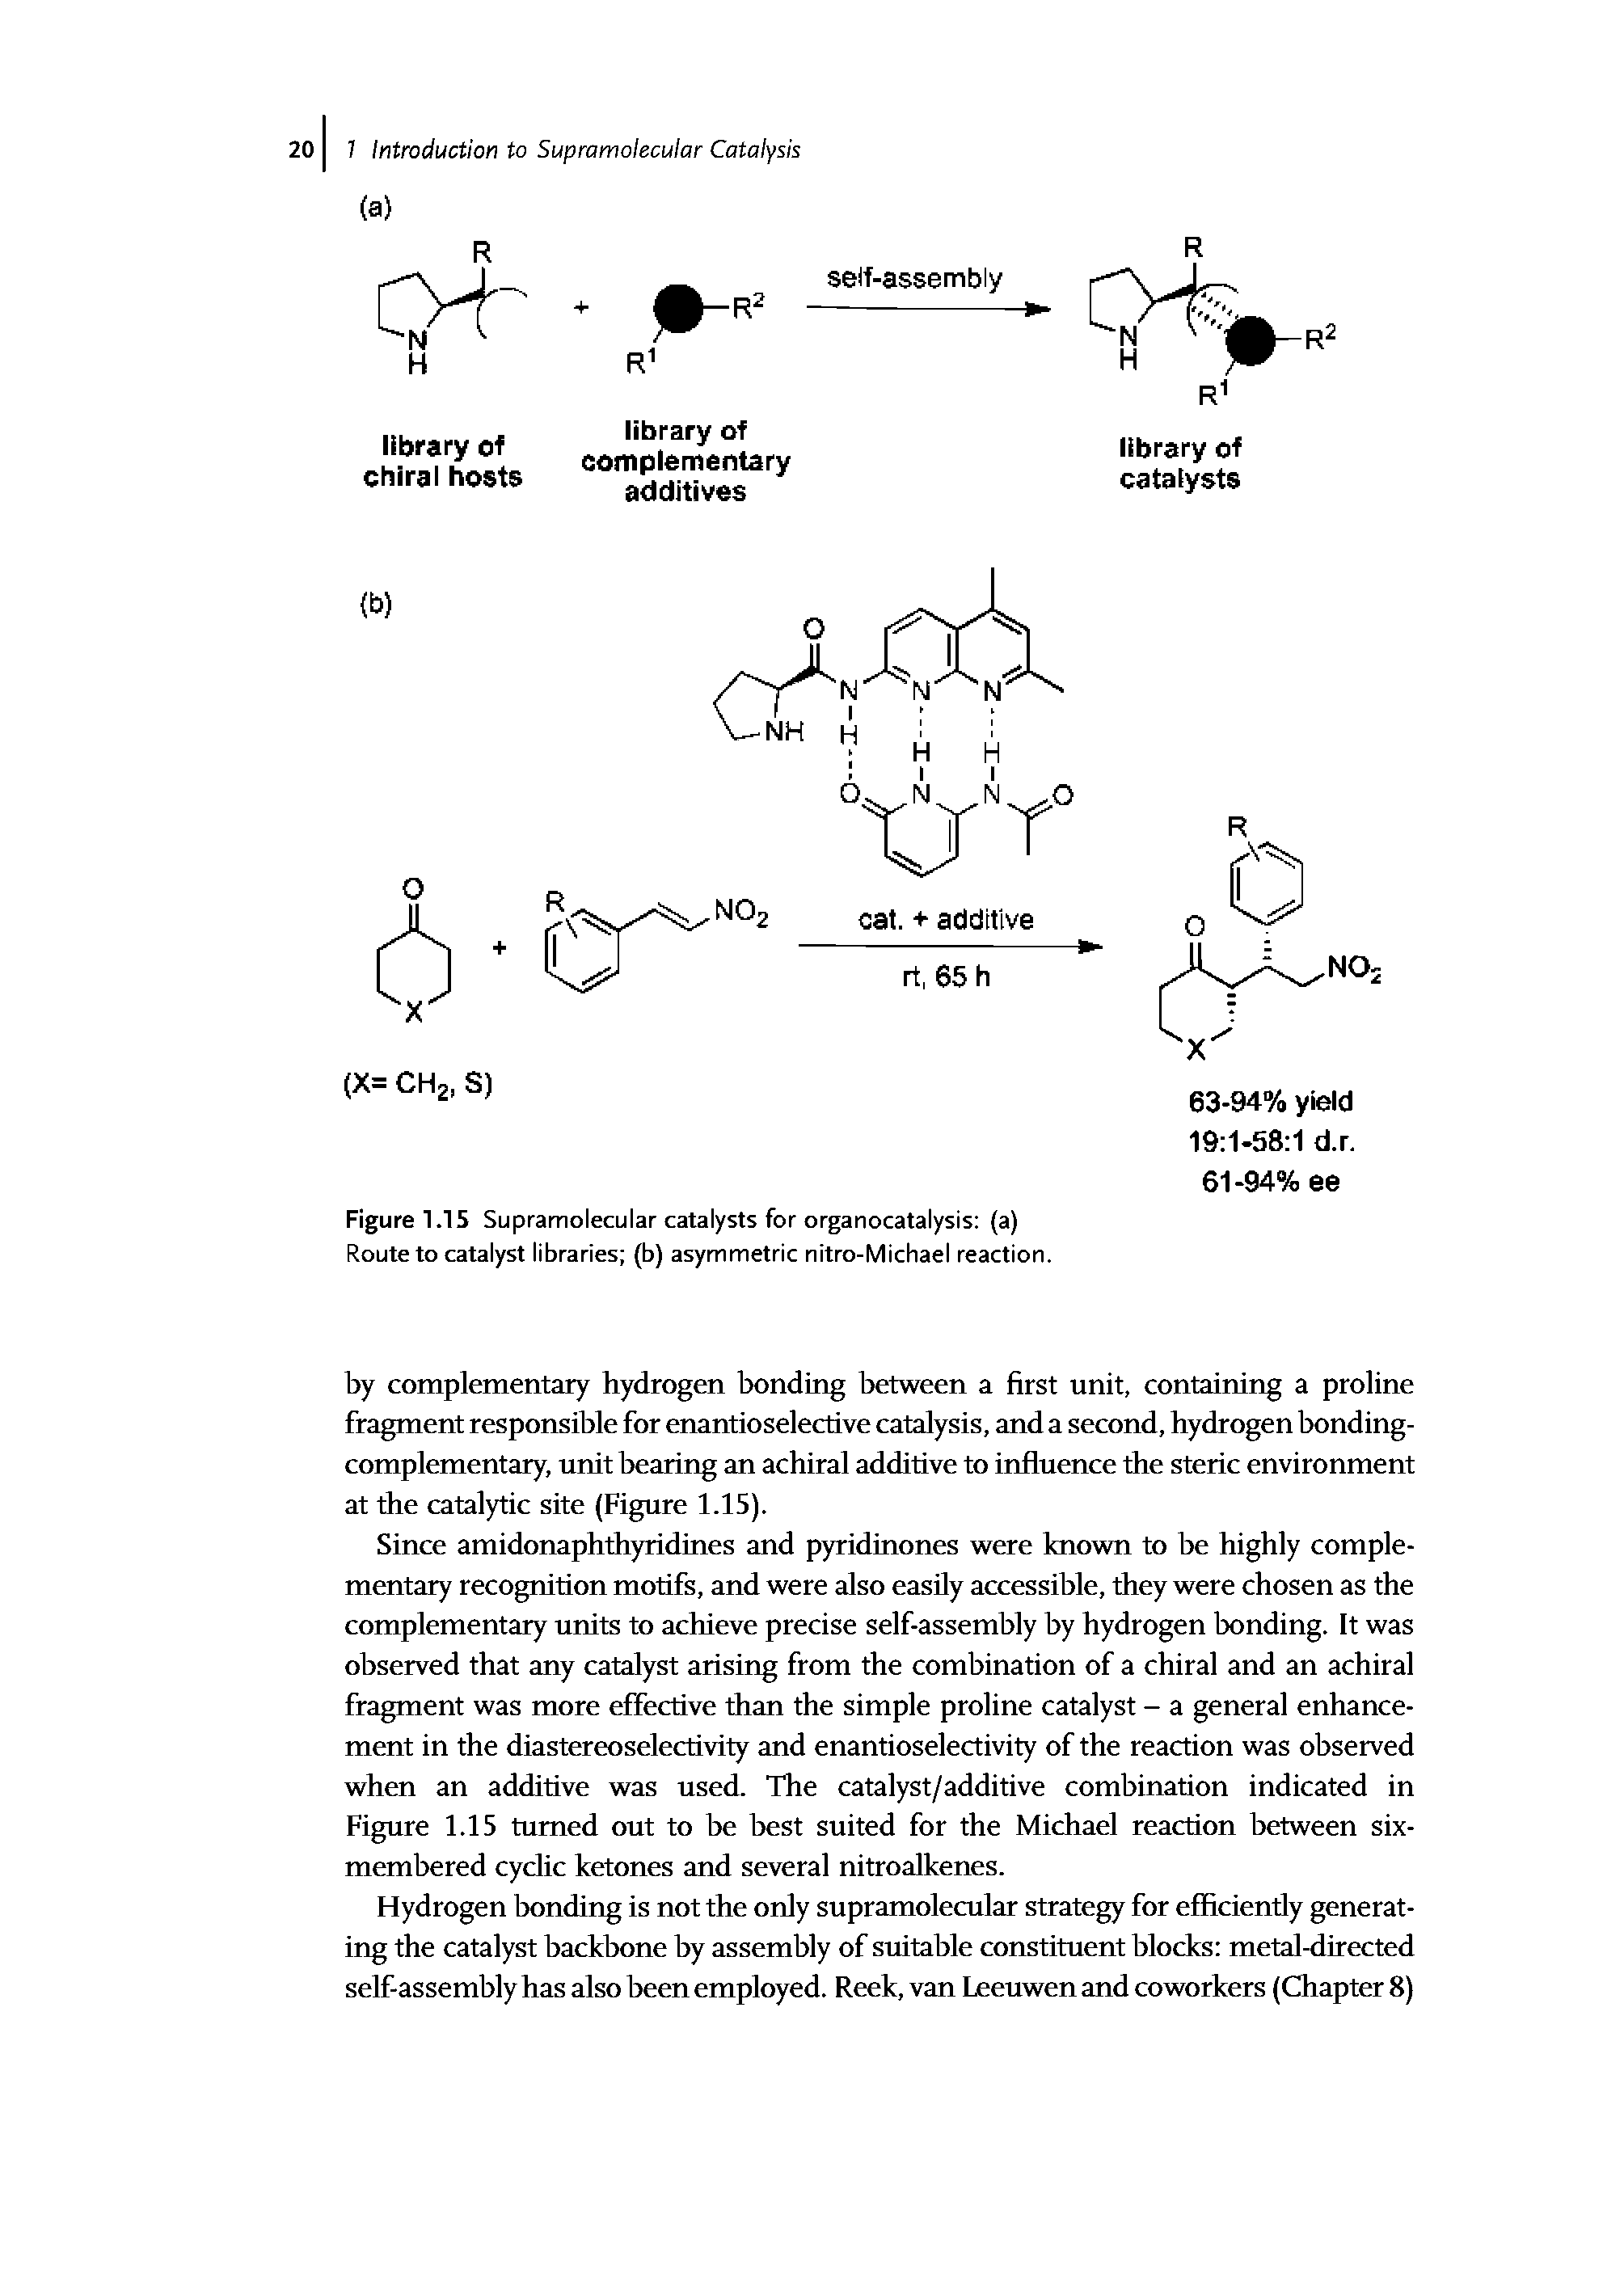 Figure 1.15 Supramolecular catalysts for organocatalysis (a) Route to catalyst libraries (b) asymmetric nitro-Michael reaction.